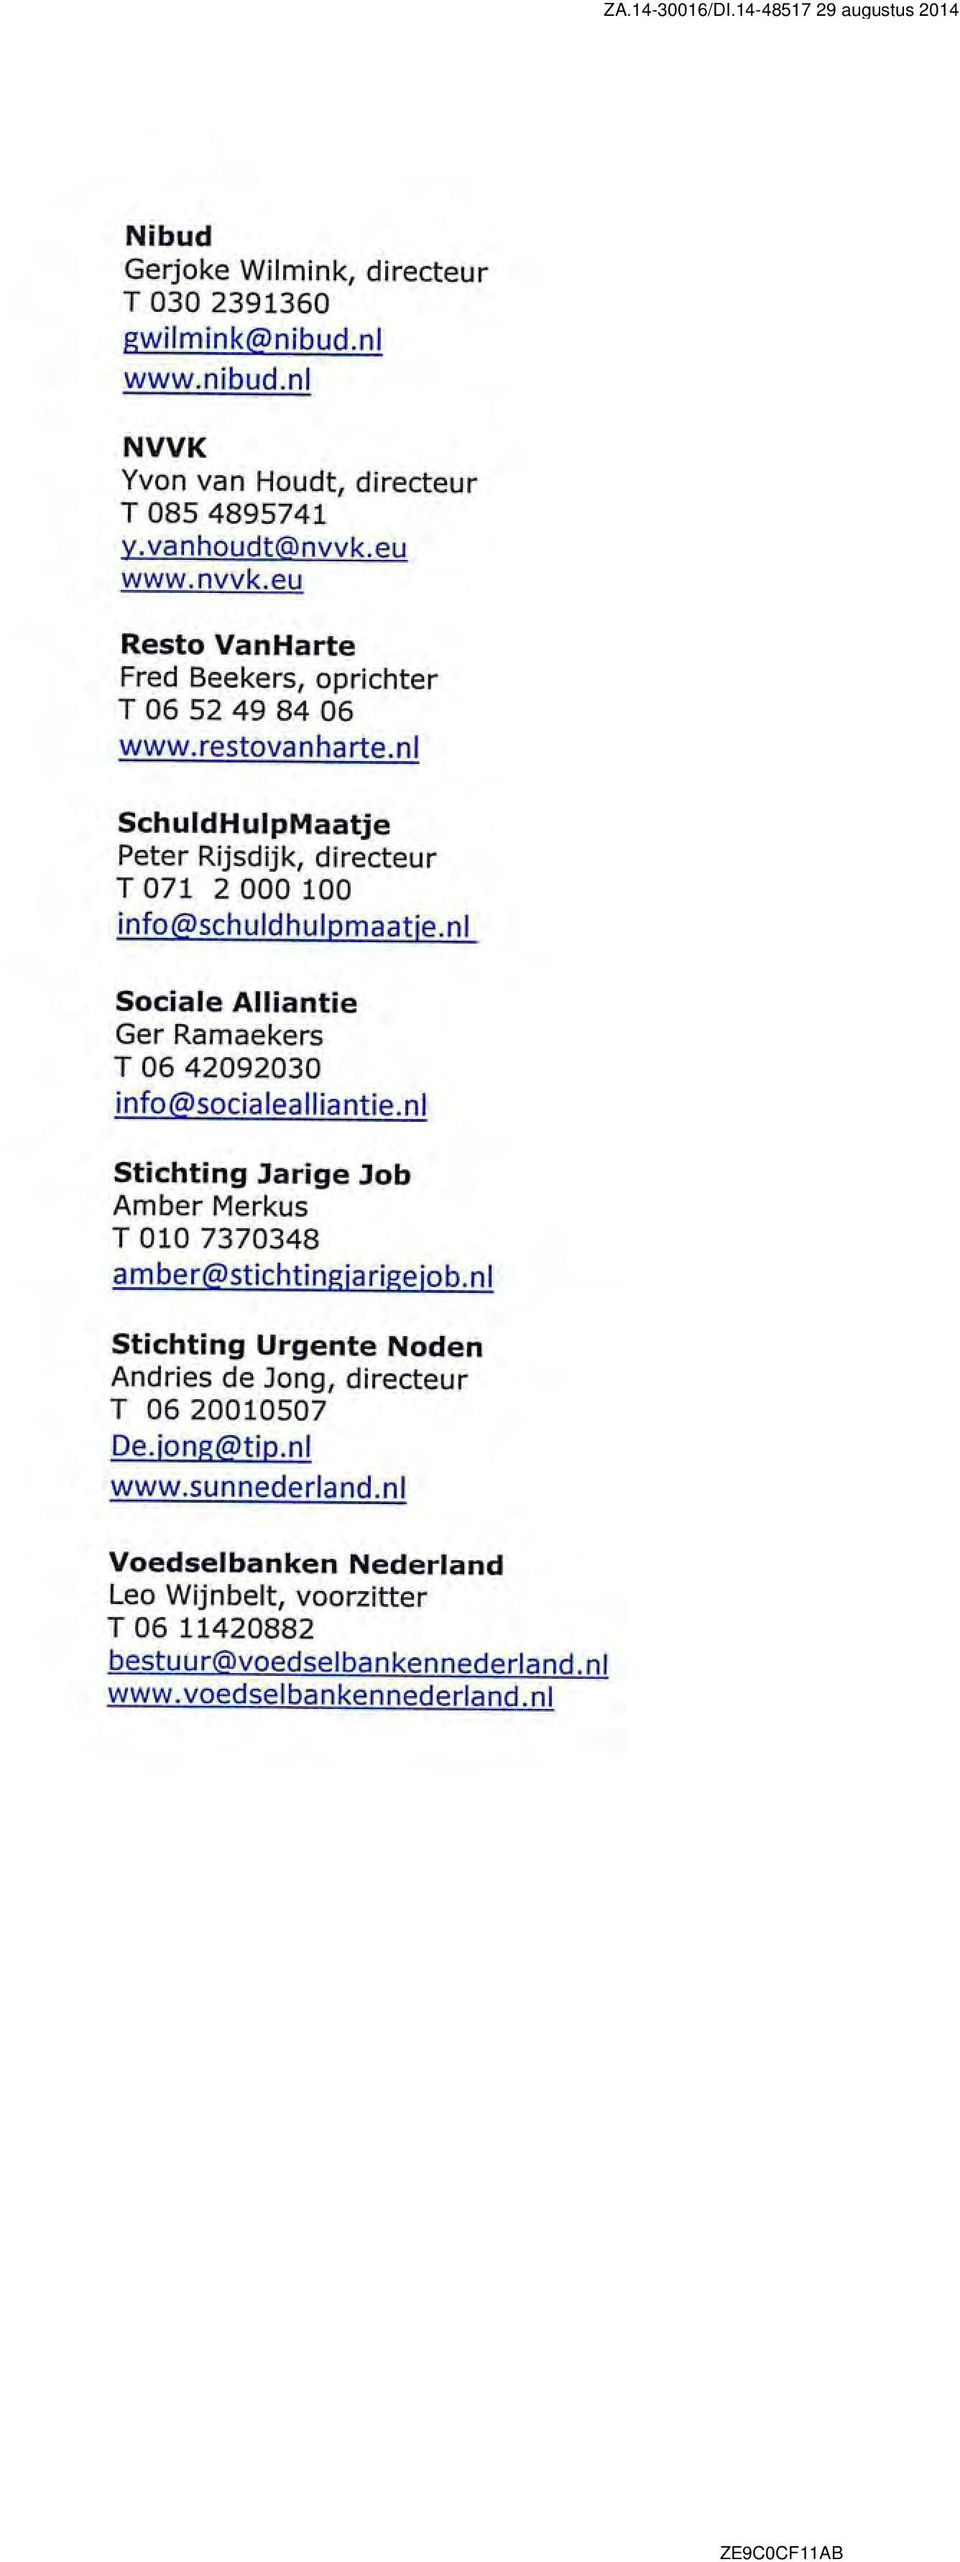 nl Sociale Alliantie Ger Ramaekers T 06 42092030 info@socialealliantie.nl Stichting Jarige Job Amber Merkus T 010 7370348 amber@stichtingiariceiob.